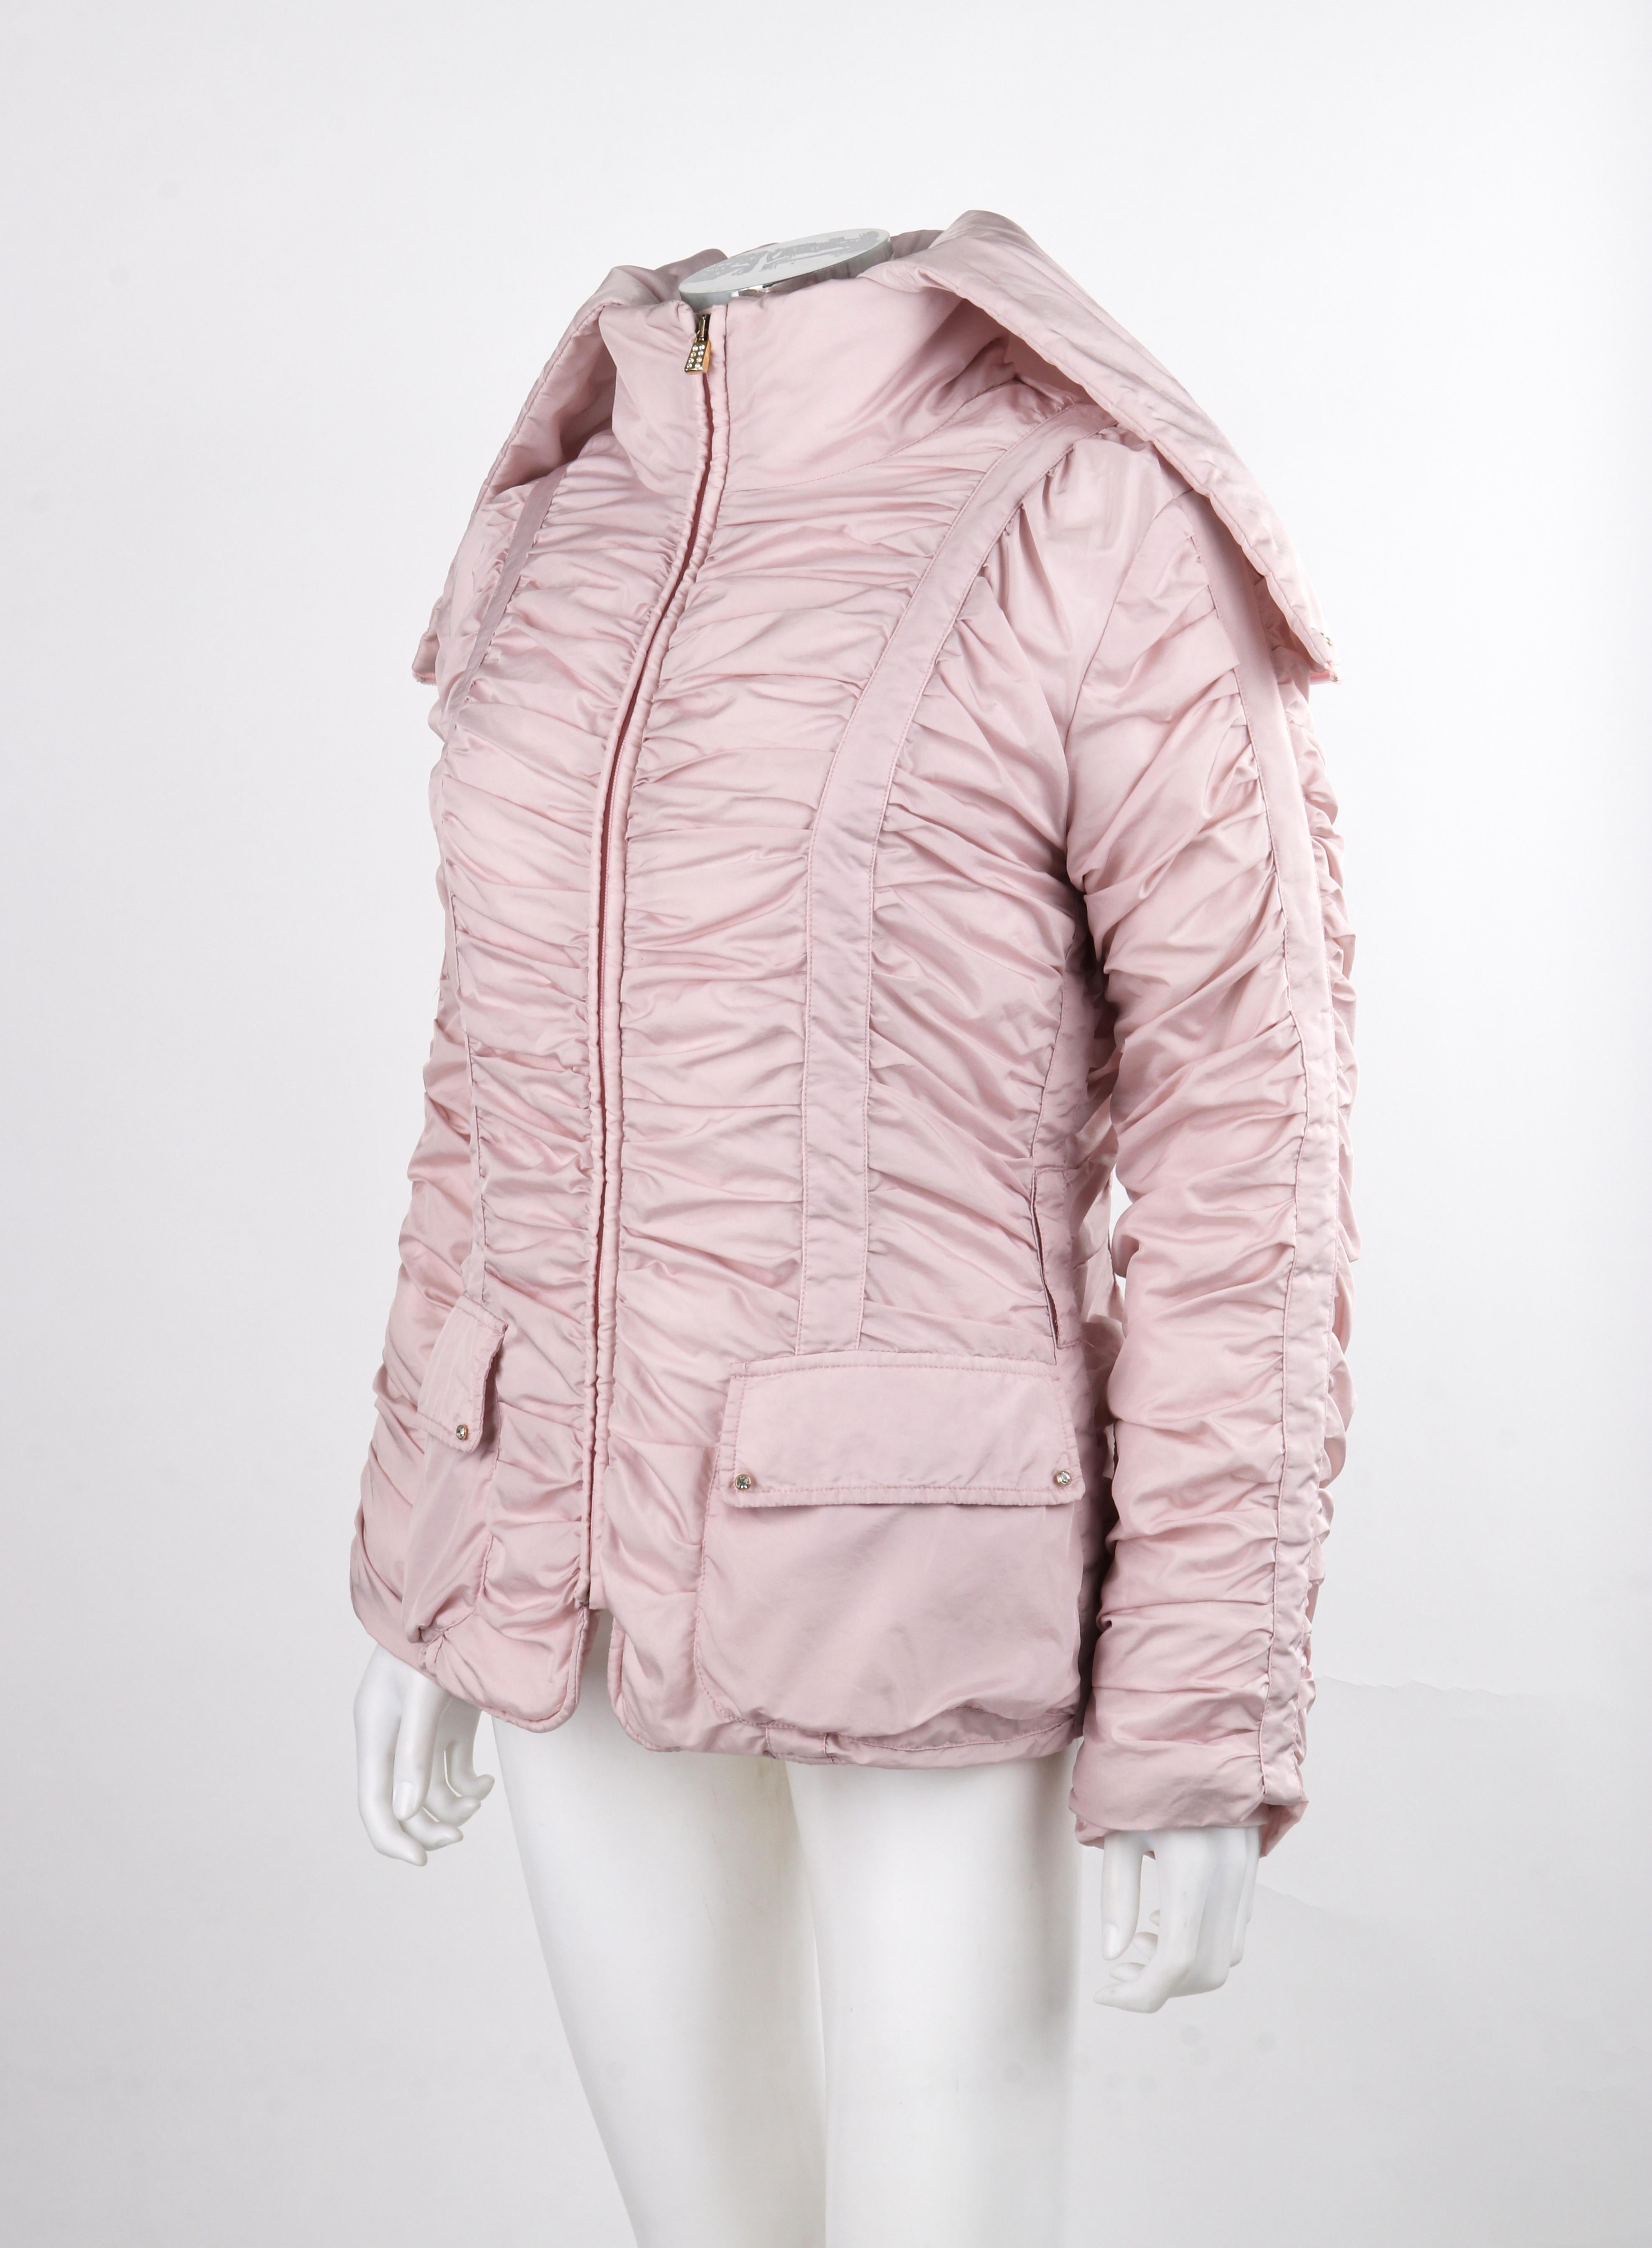 ALEXANDER McQUEEN c.1990's Vtg Pink Ruched Hooded Zip Up Puffer Jacket Coat For Sale 5